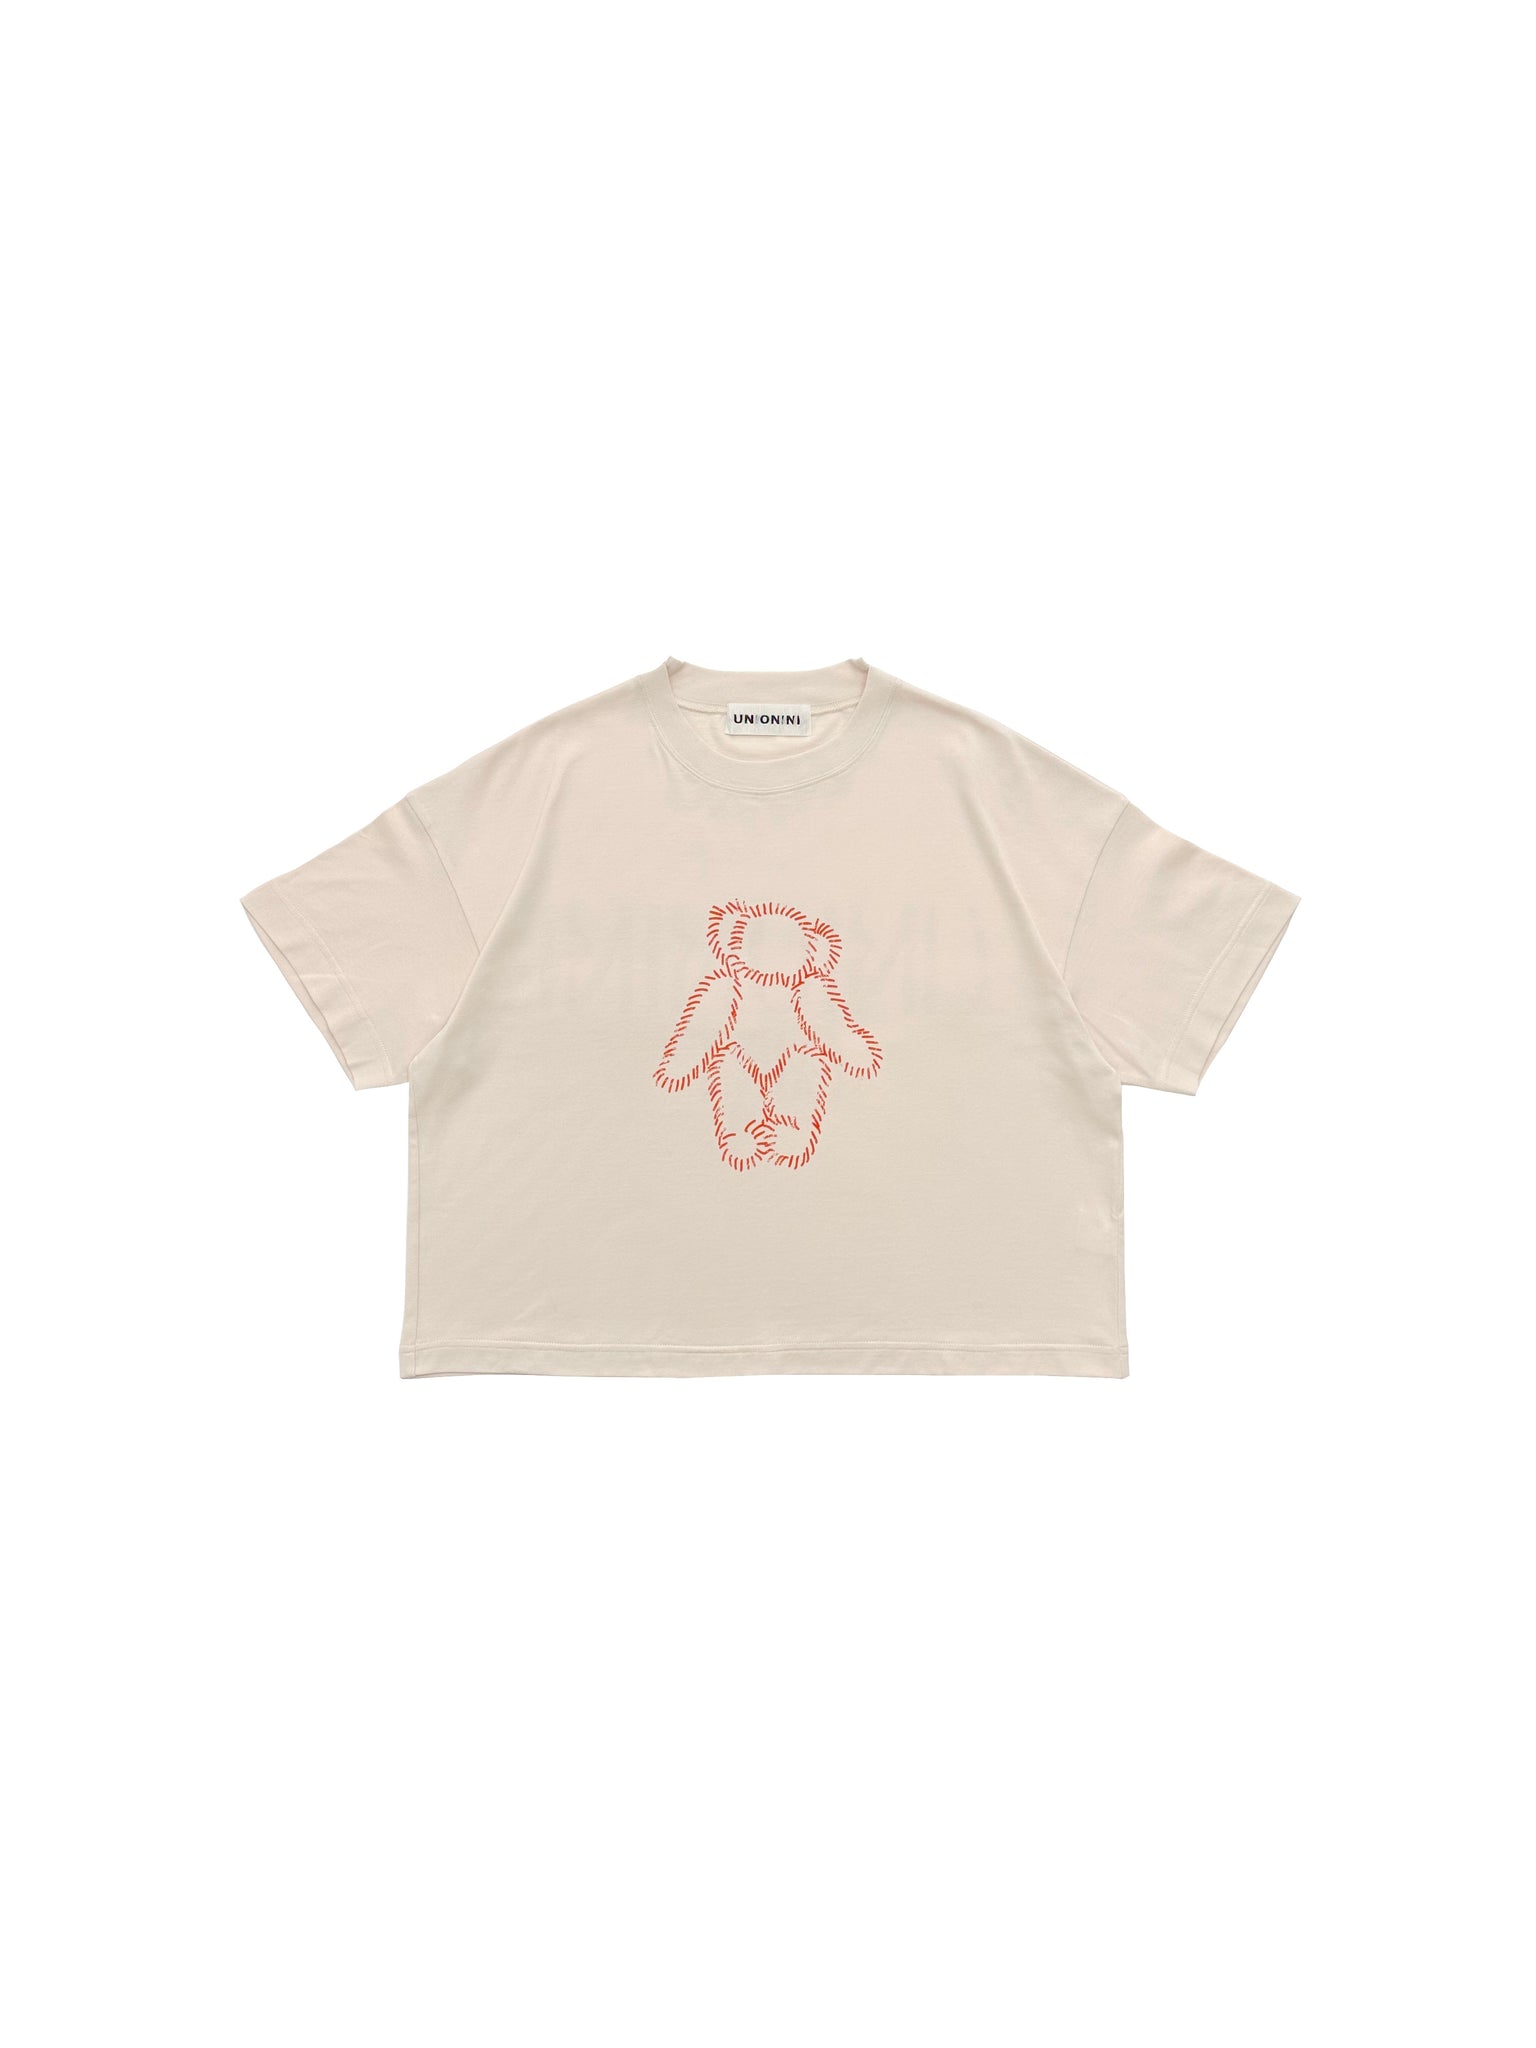 UNIONINI/ユニオニーニ/ teddybear logo big tee（pink beige)cs049